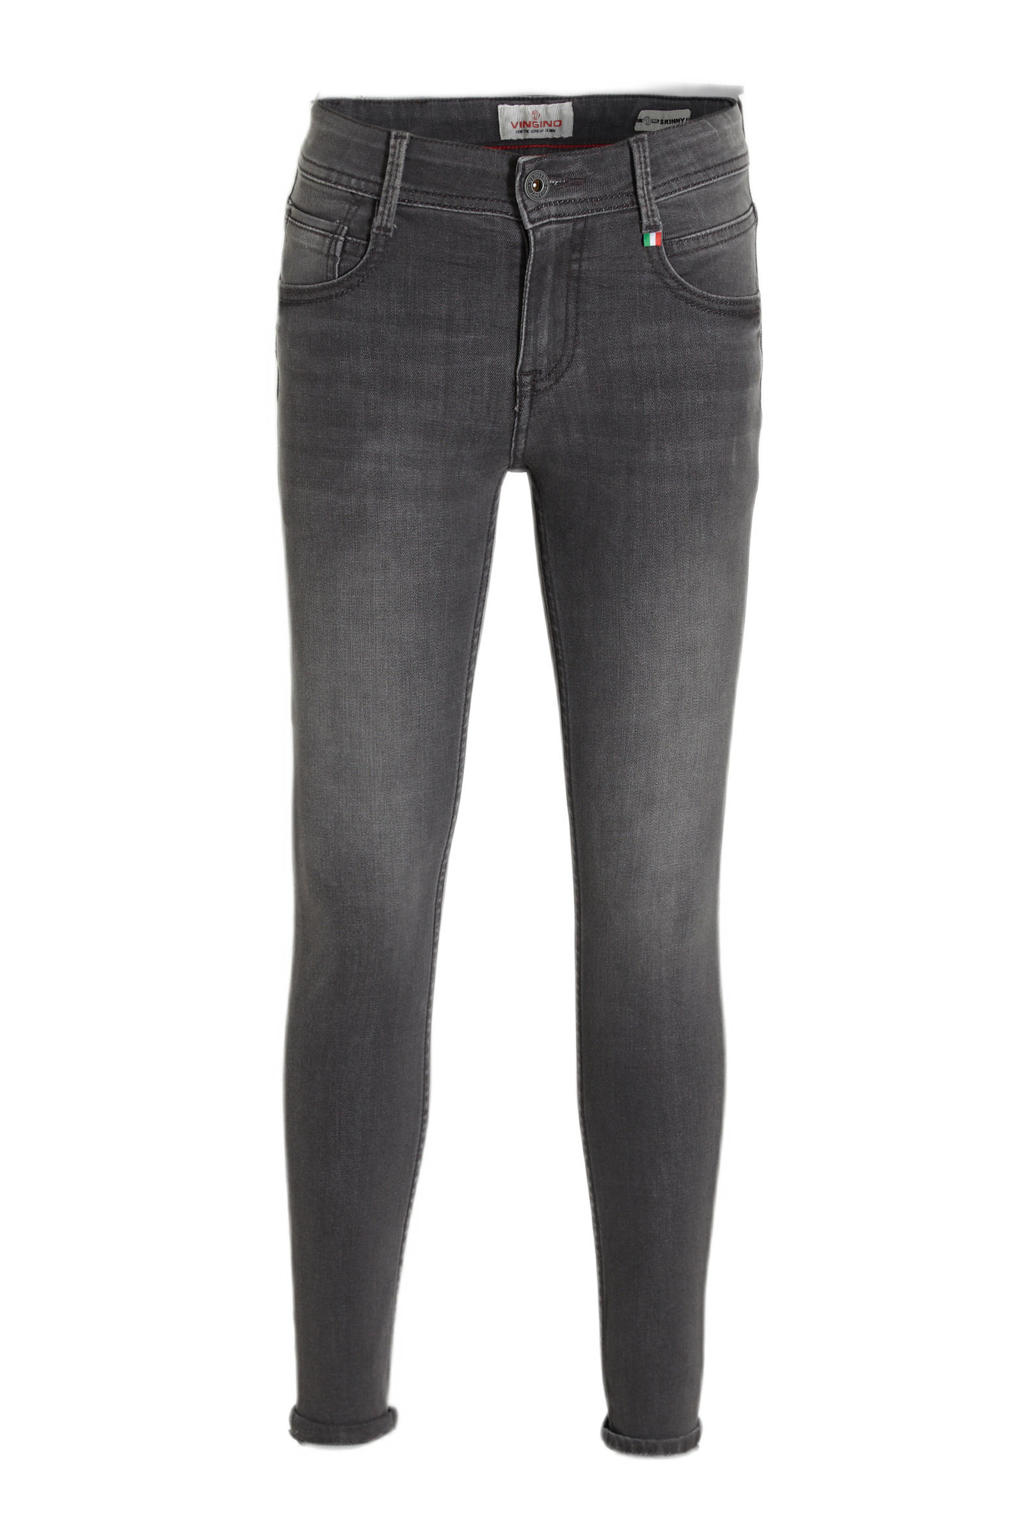 Grey denim jongens Vingino skinny jeans Alex vintage van katoen met regular waist en rits- en knoopsluiting